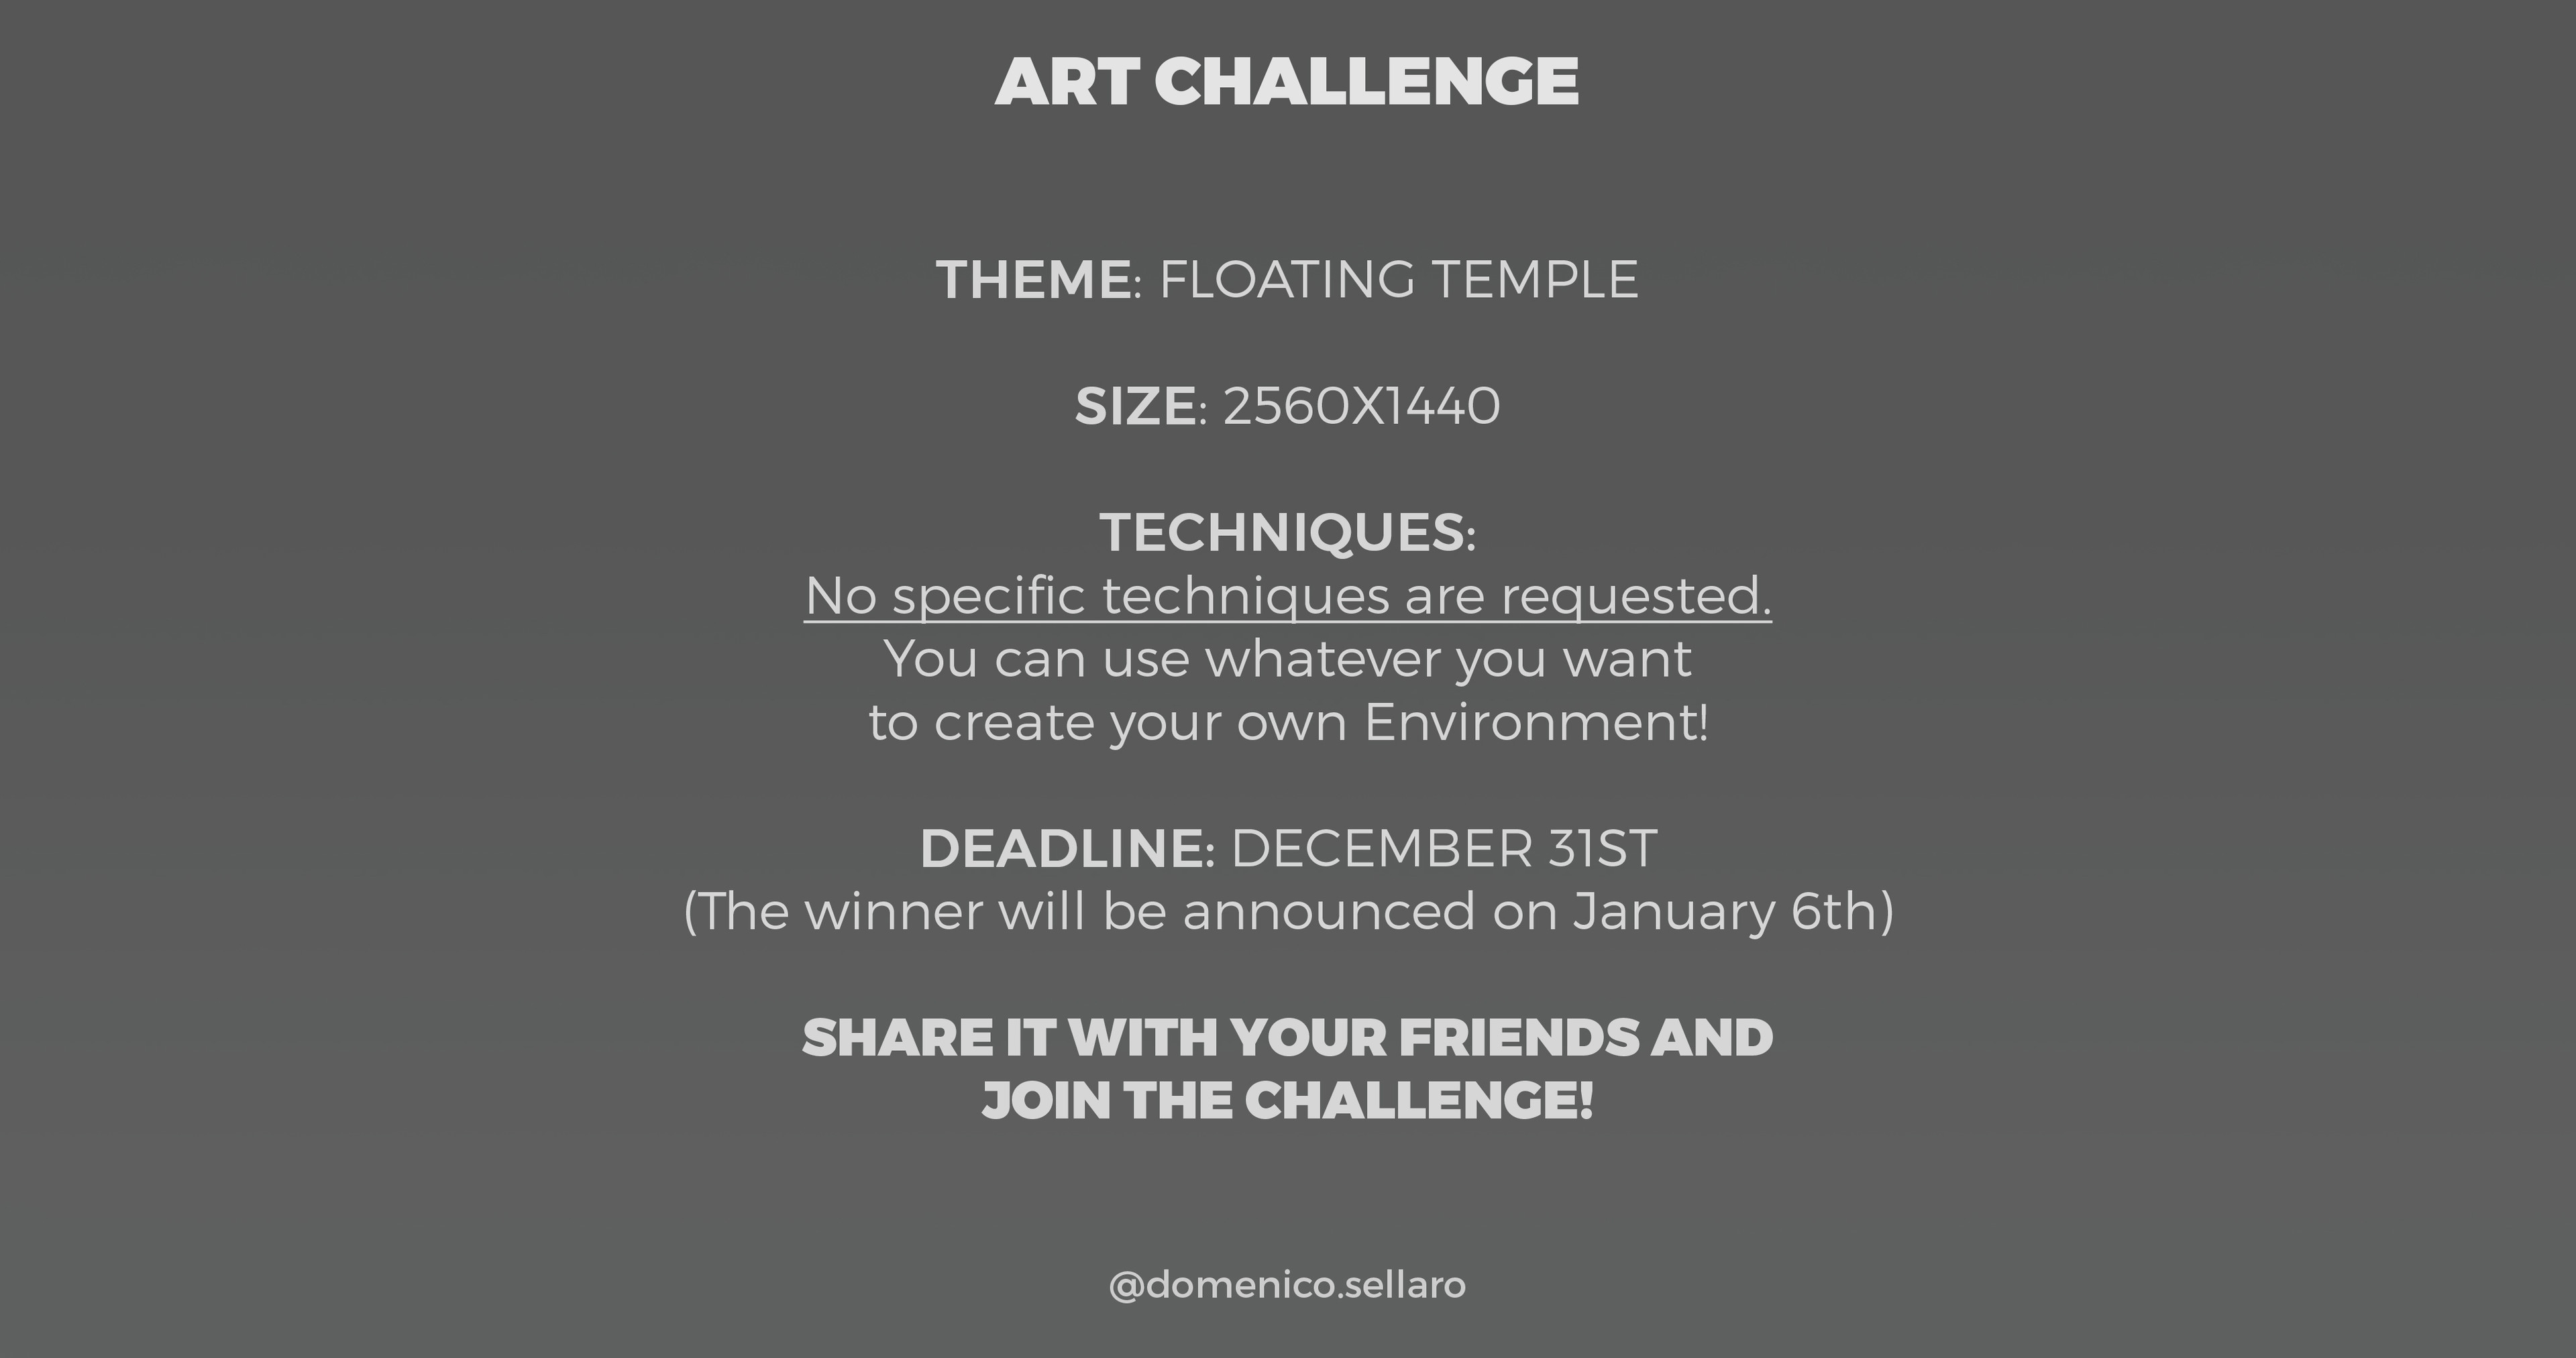 Art Challenge rules